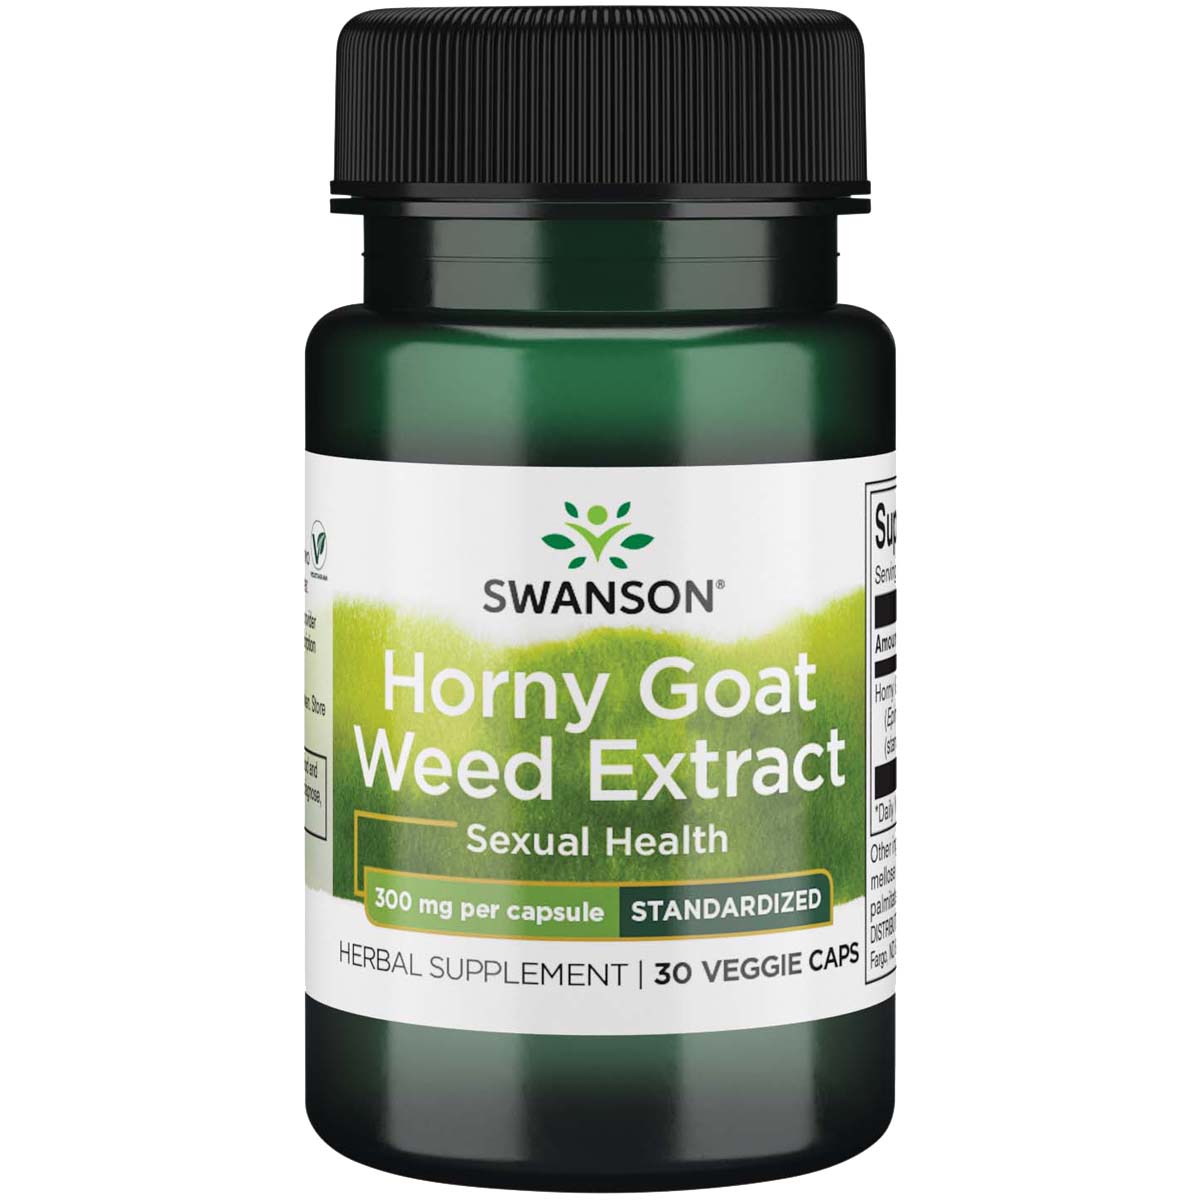 Swanson Horny Goat Weed Extract Standardized 30 Veggie Capsules 300 mg